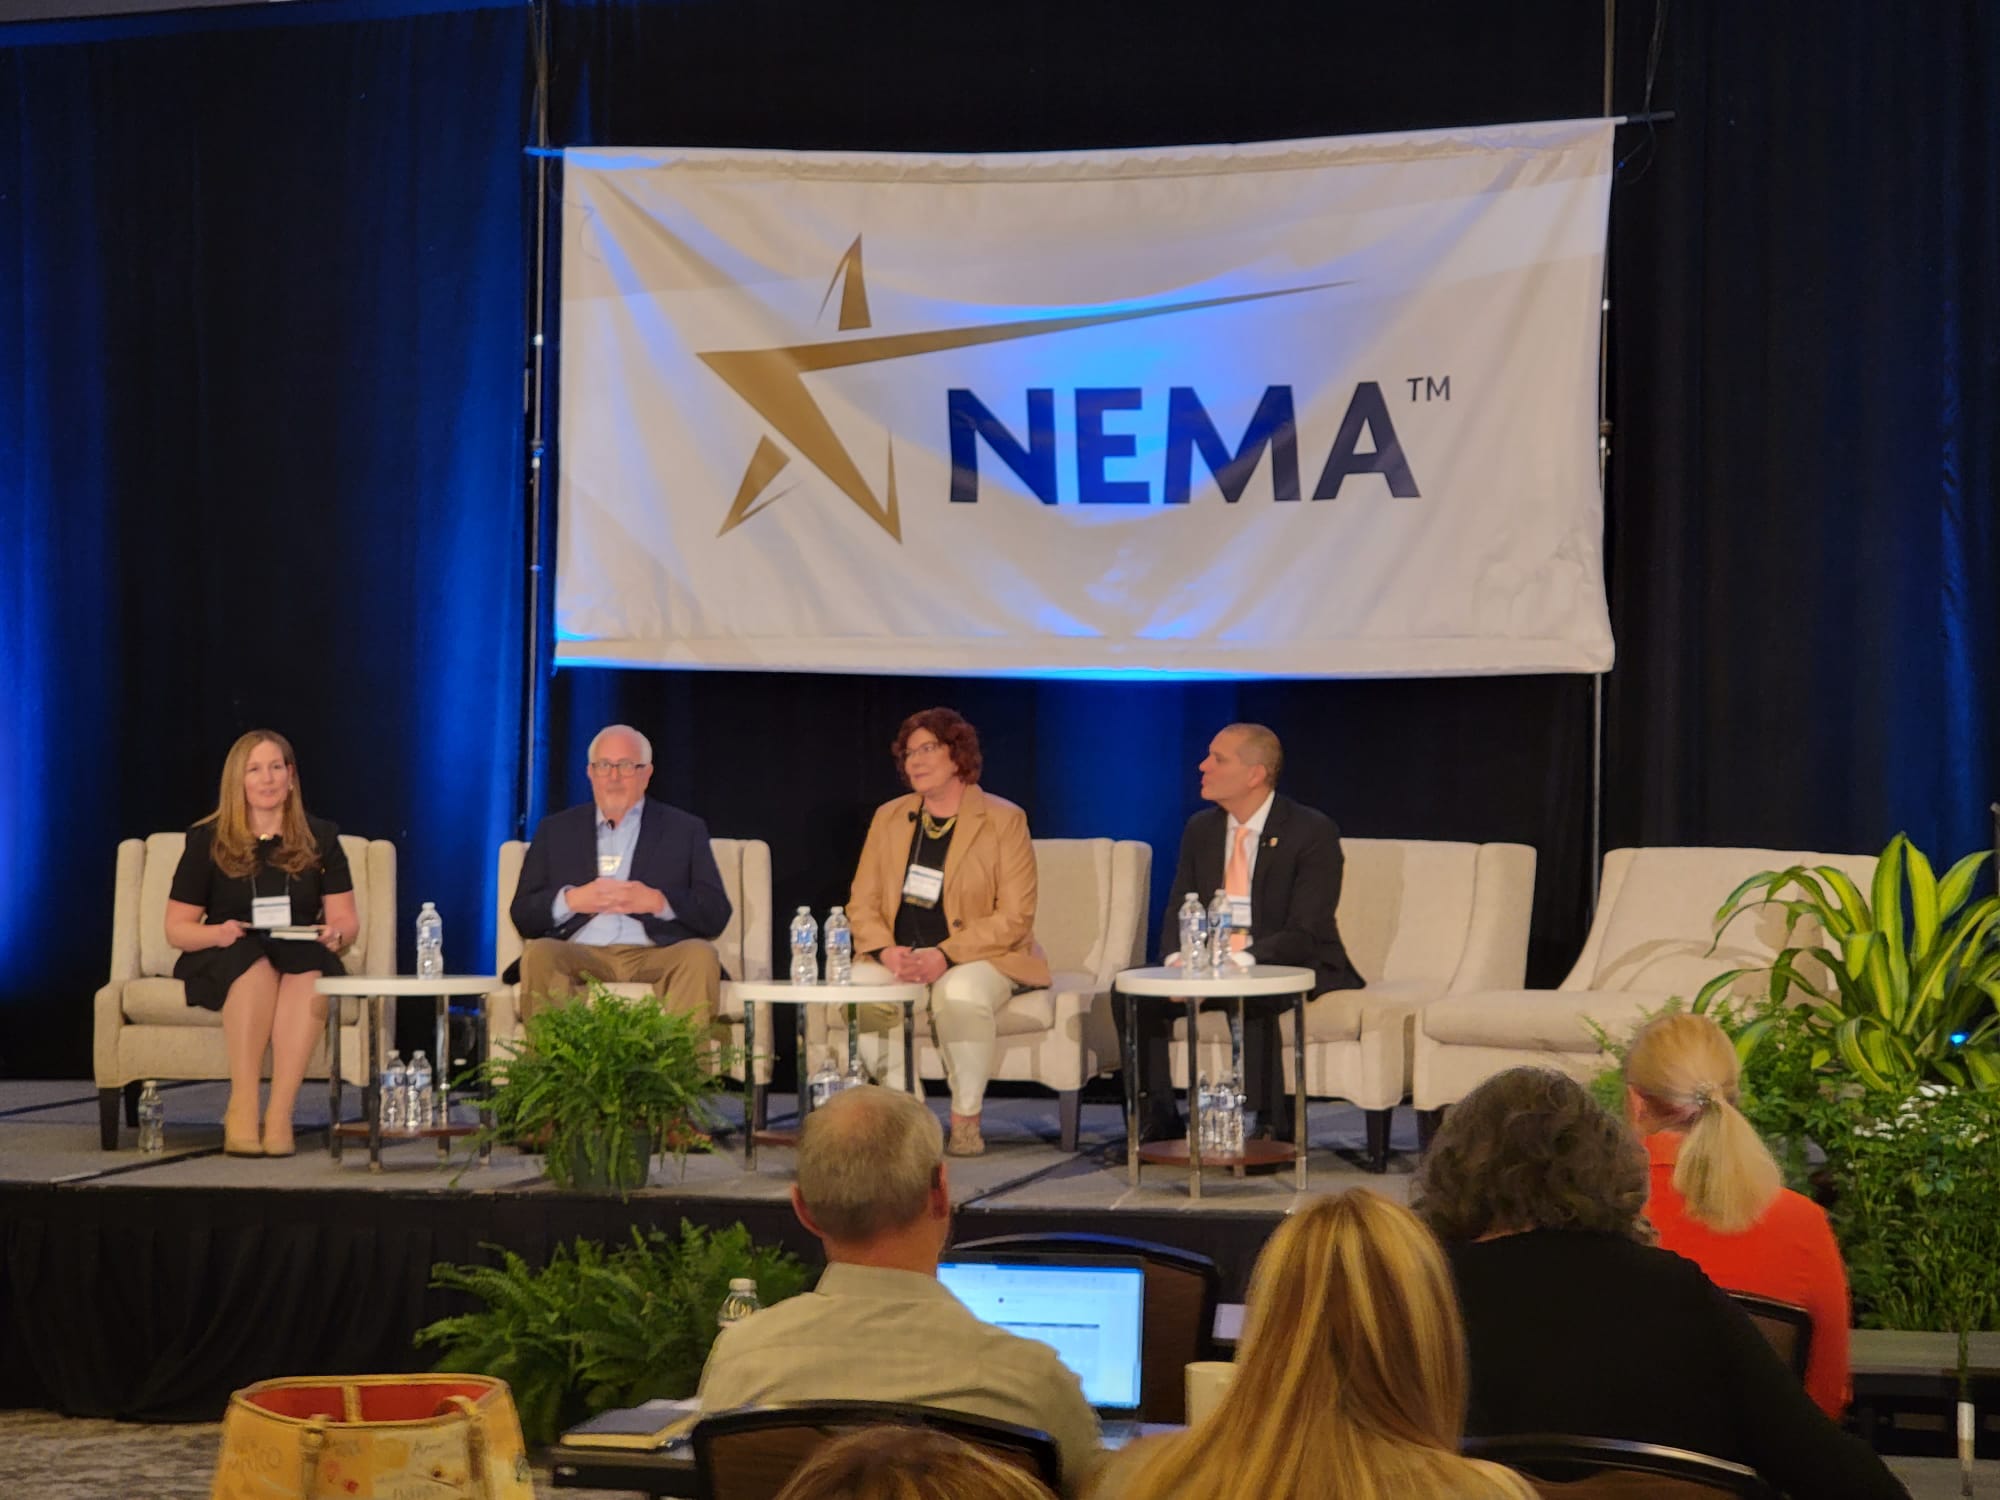 CG Global Participates in the NEMA Conference.